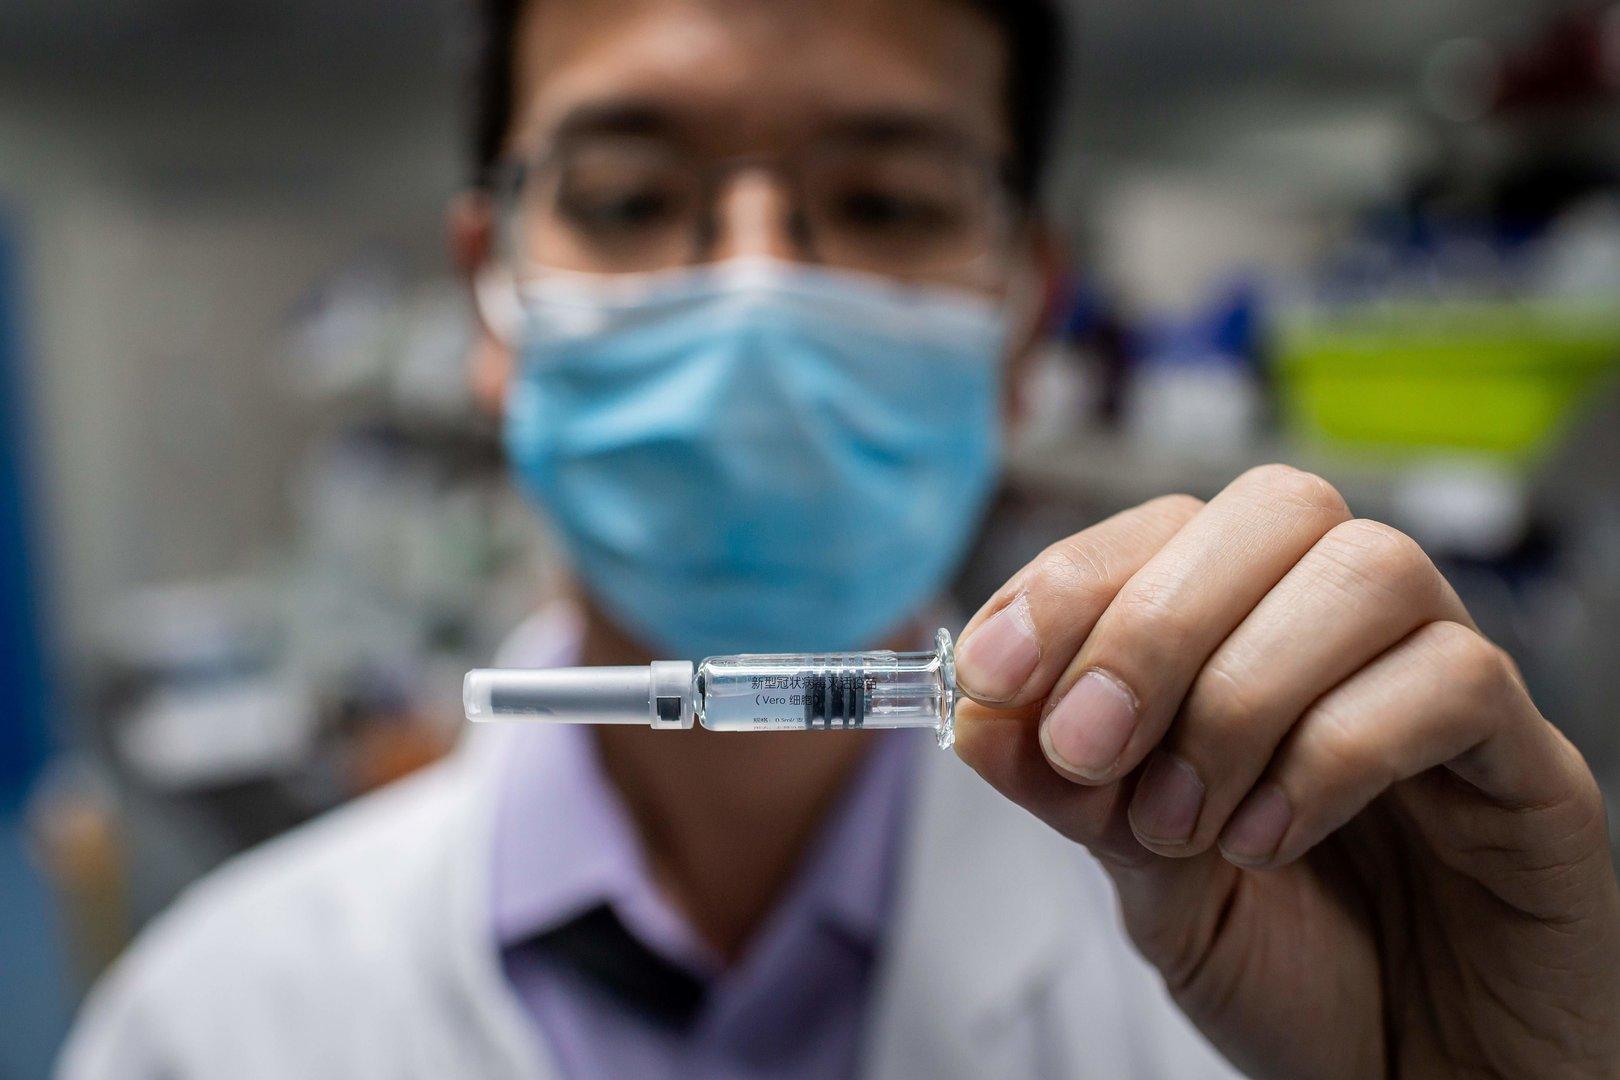 Biochemiker rechnet bald mit Medikament, Impfstoff dauert länger